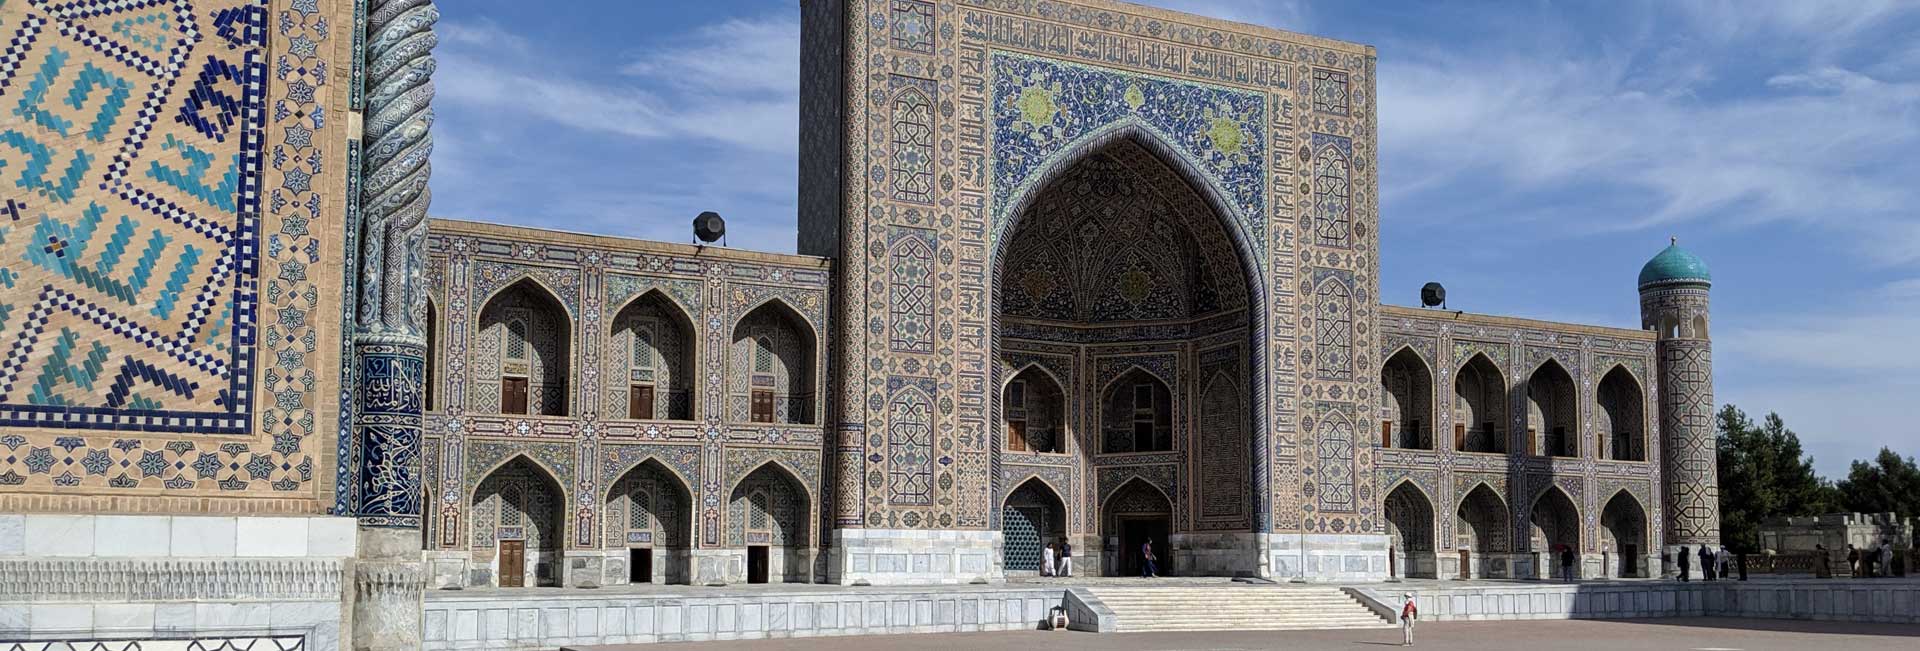 Samarkand, Uzbekistan. Photo credit: Jake Smth